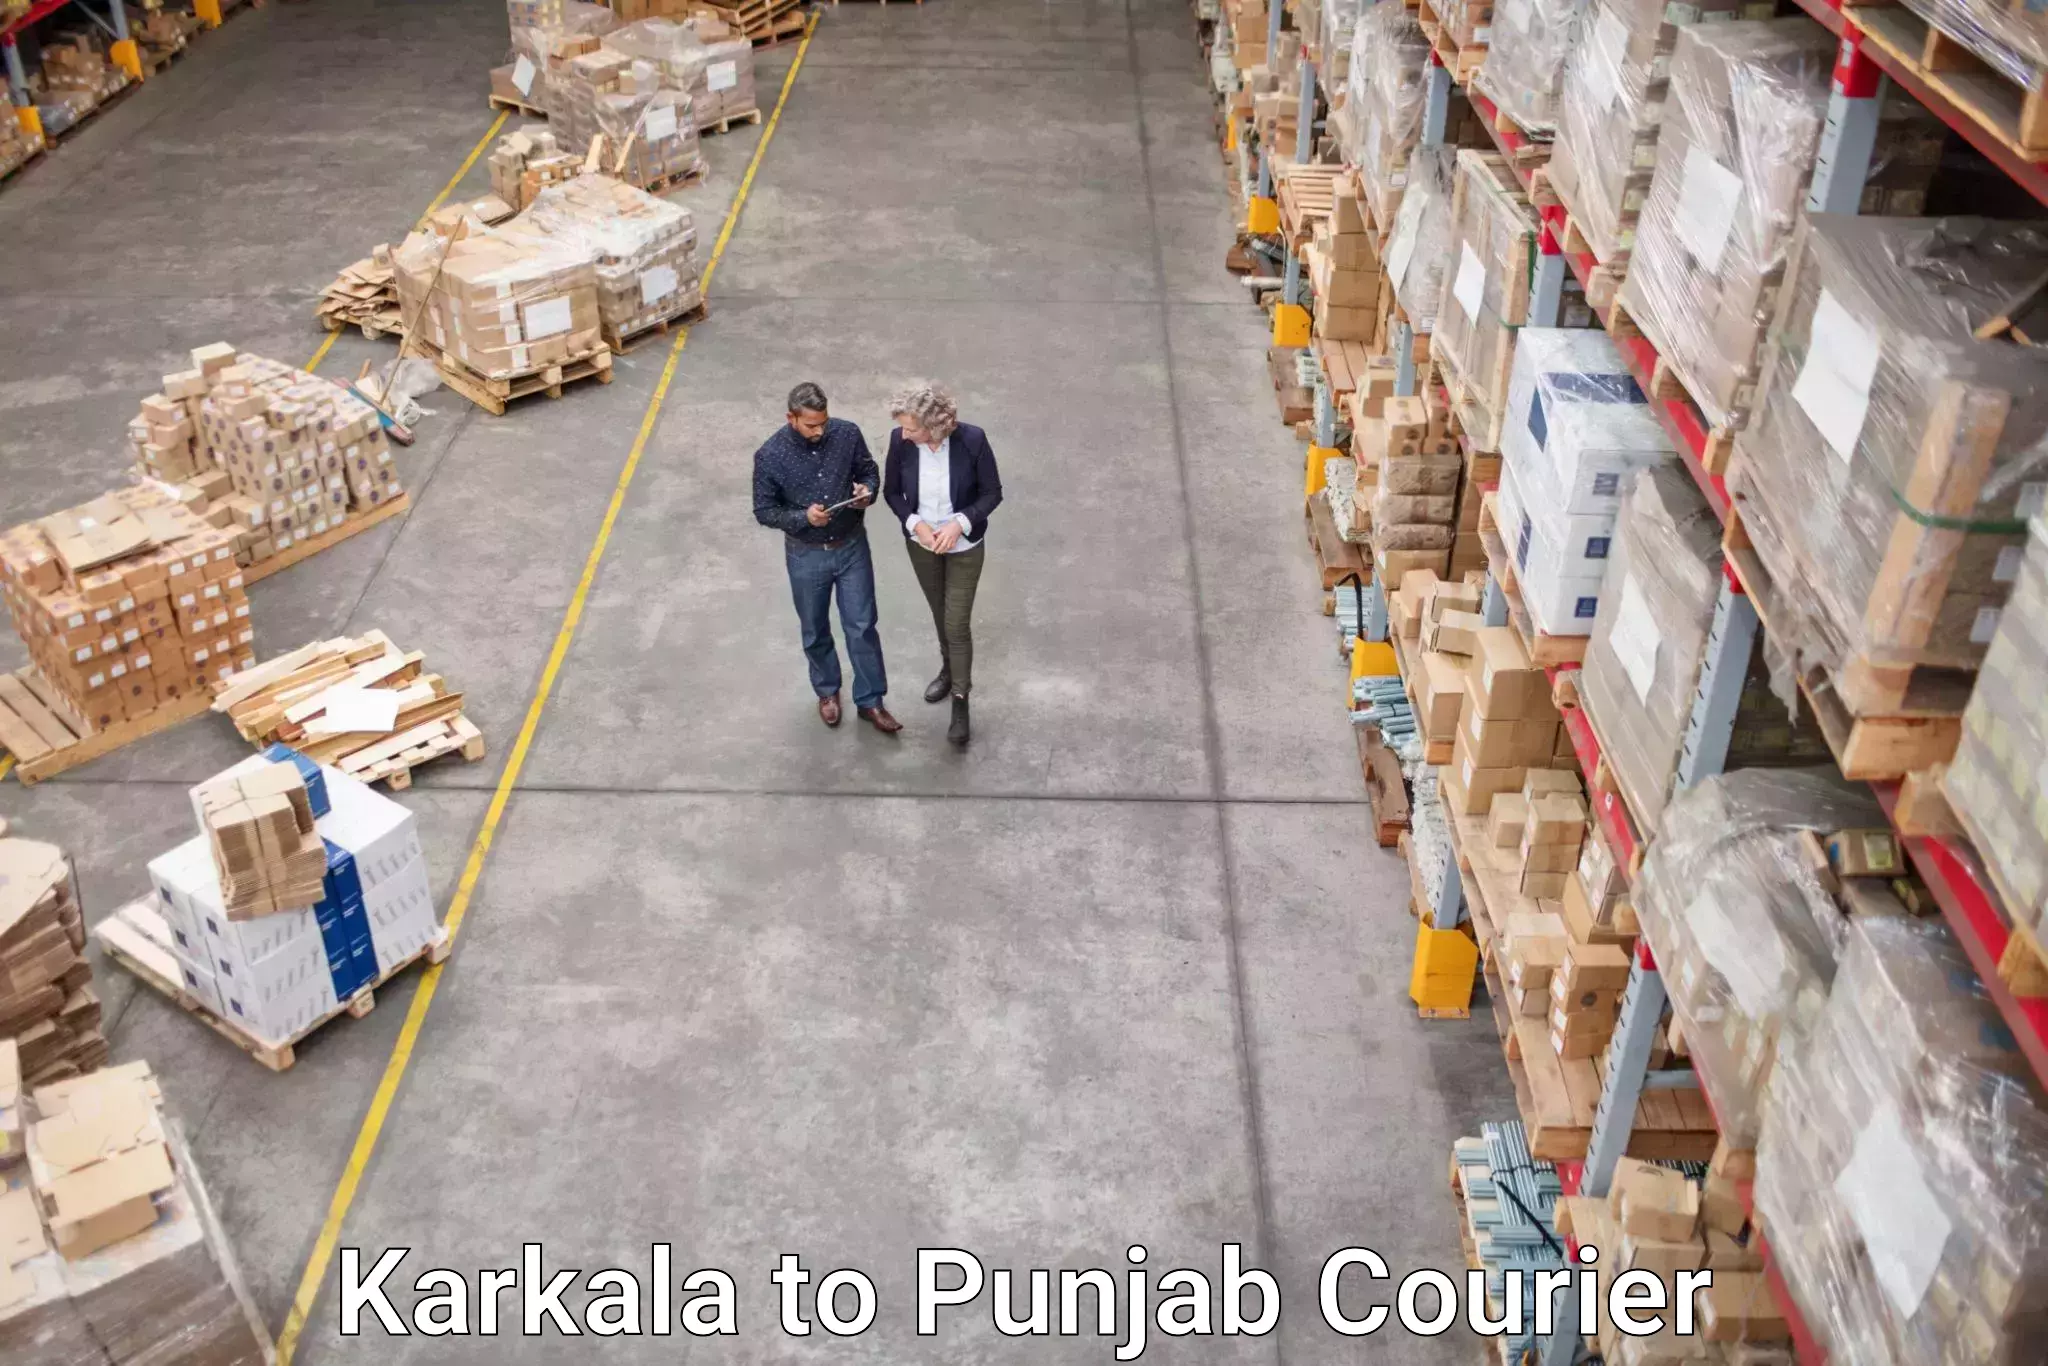 Courier service comparison Karkala to Punjab